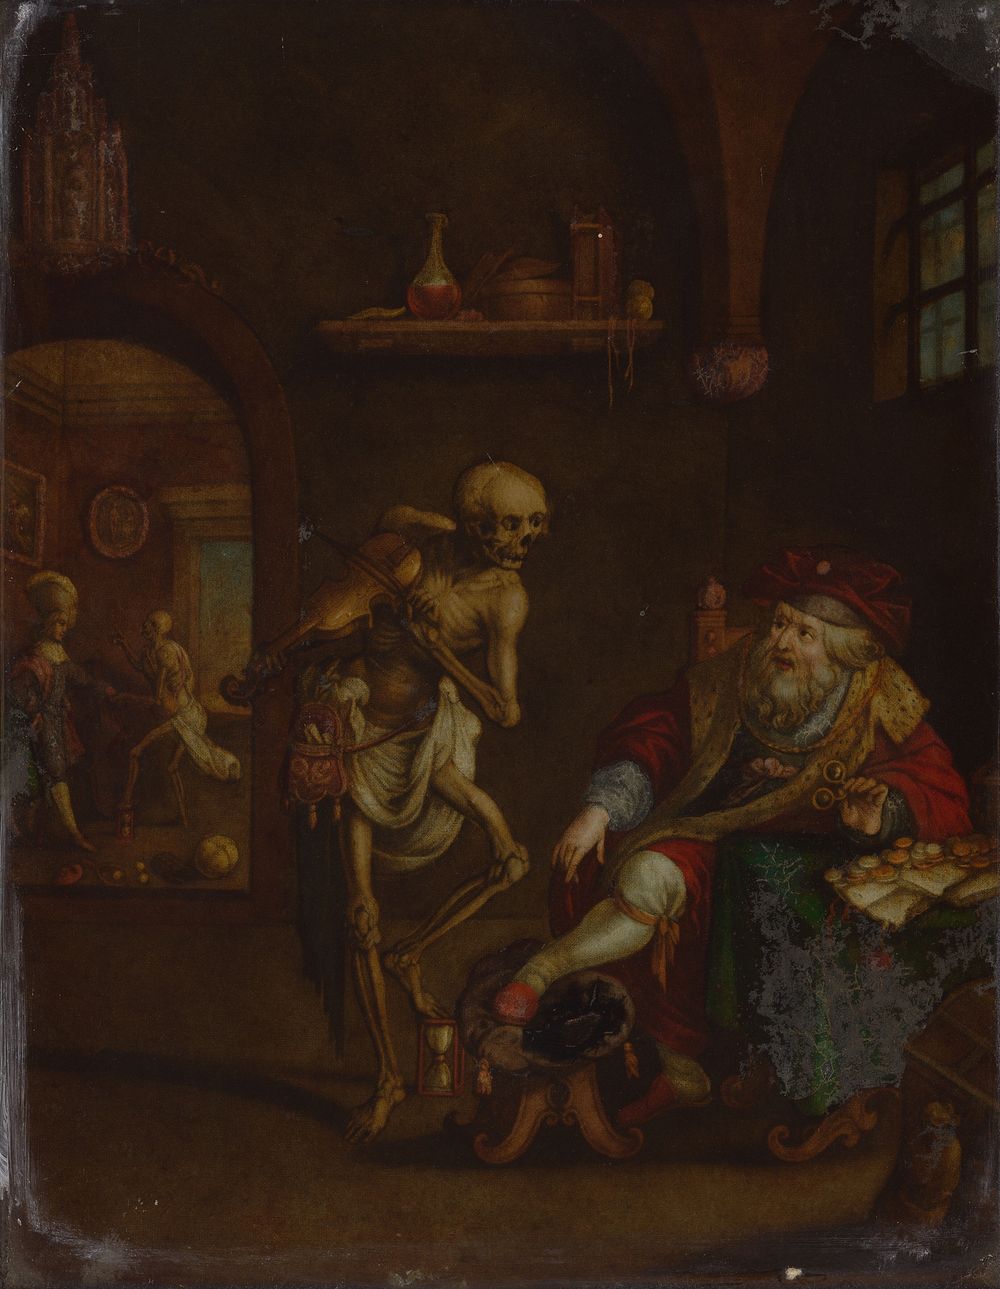 Death and the miser. Coloured mezzotint after Frans Francken.